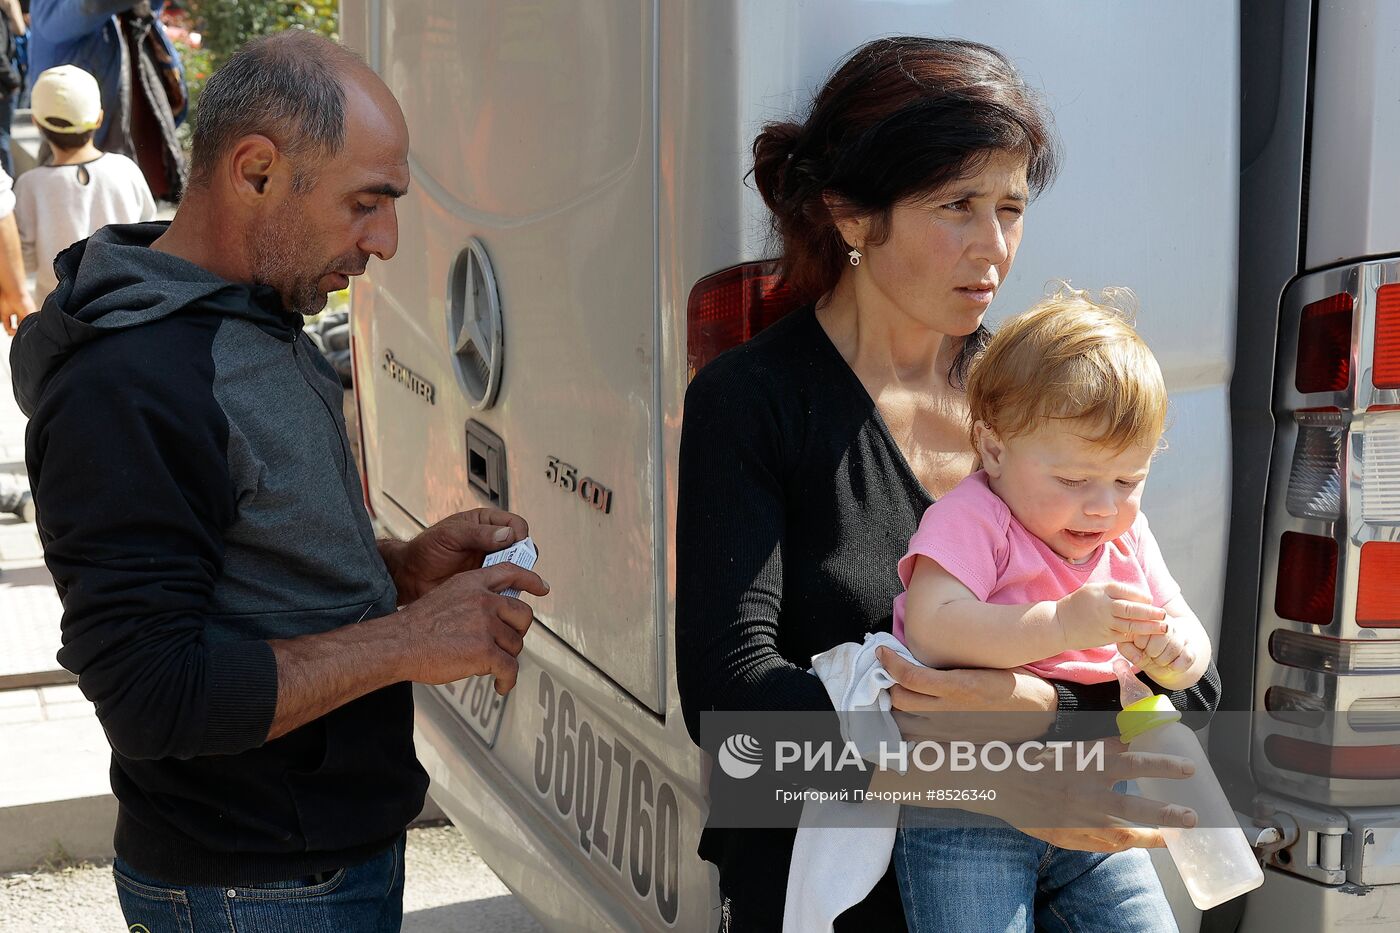 Беженцы из Нагорного Карабаха